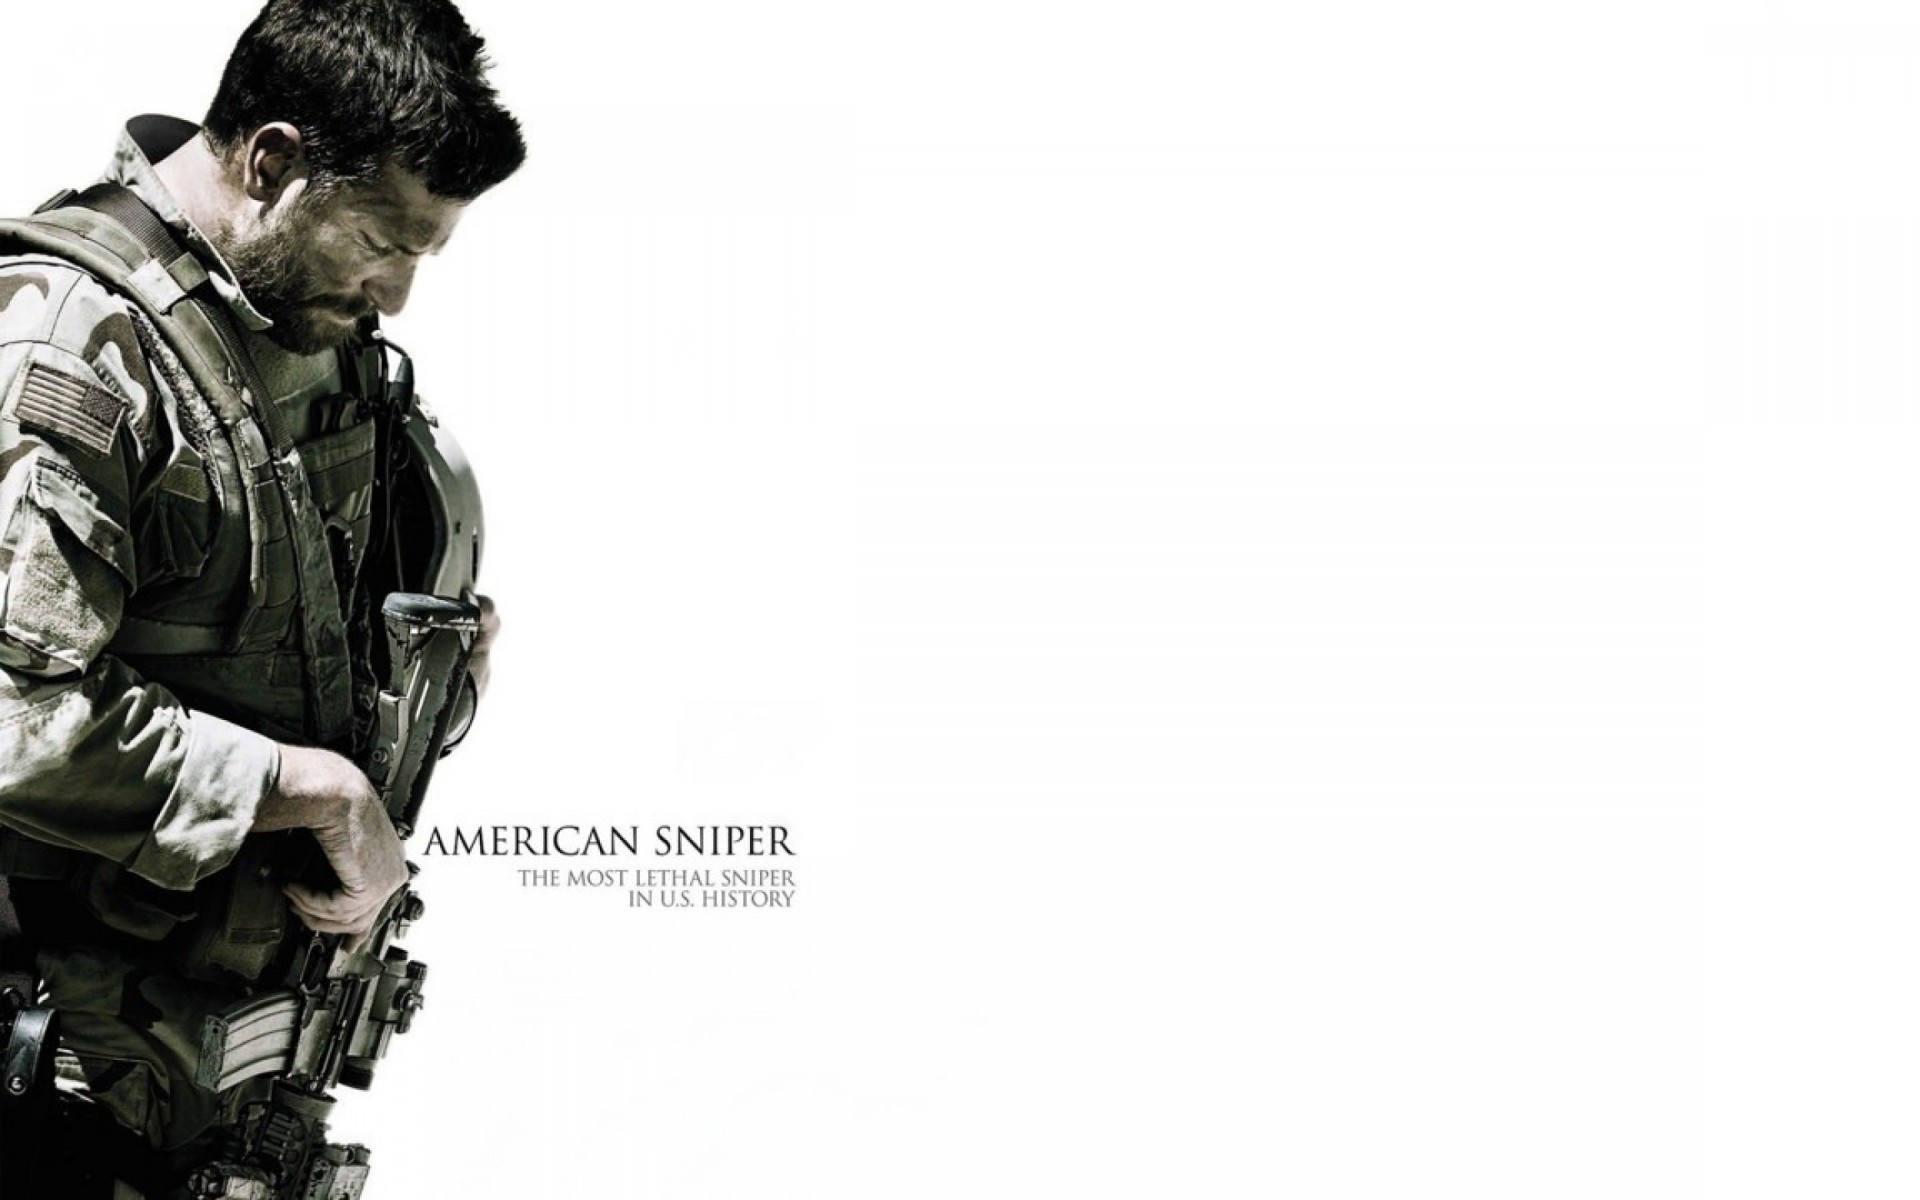 Bradley Cooper As Chris Kyle in American sniper Wallpaper for Desktop 1920x1200